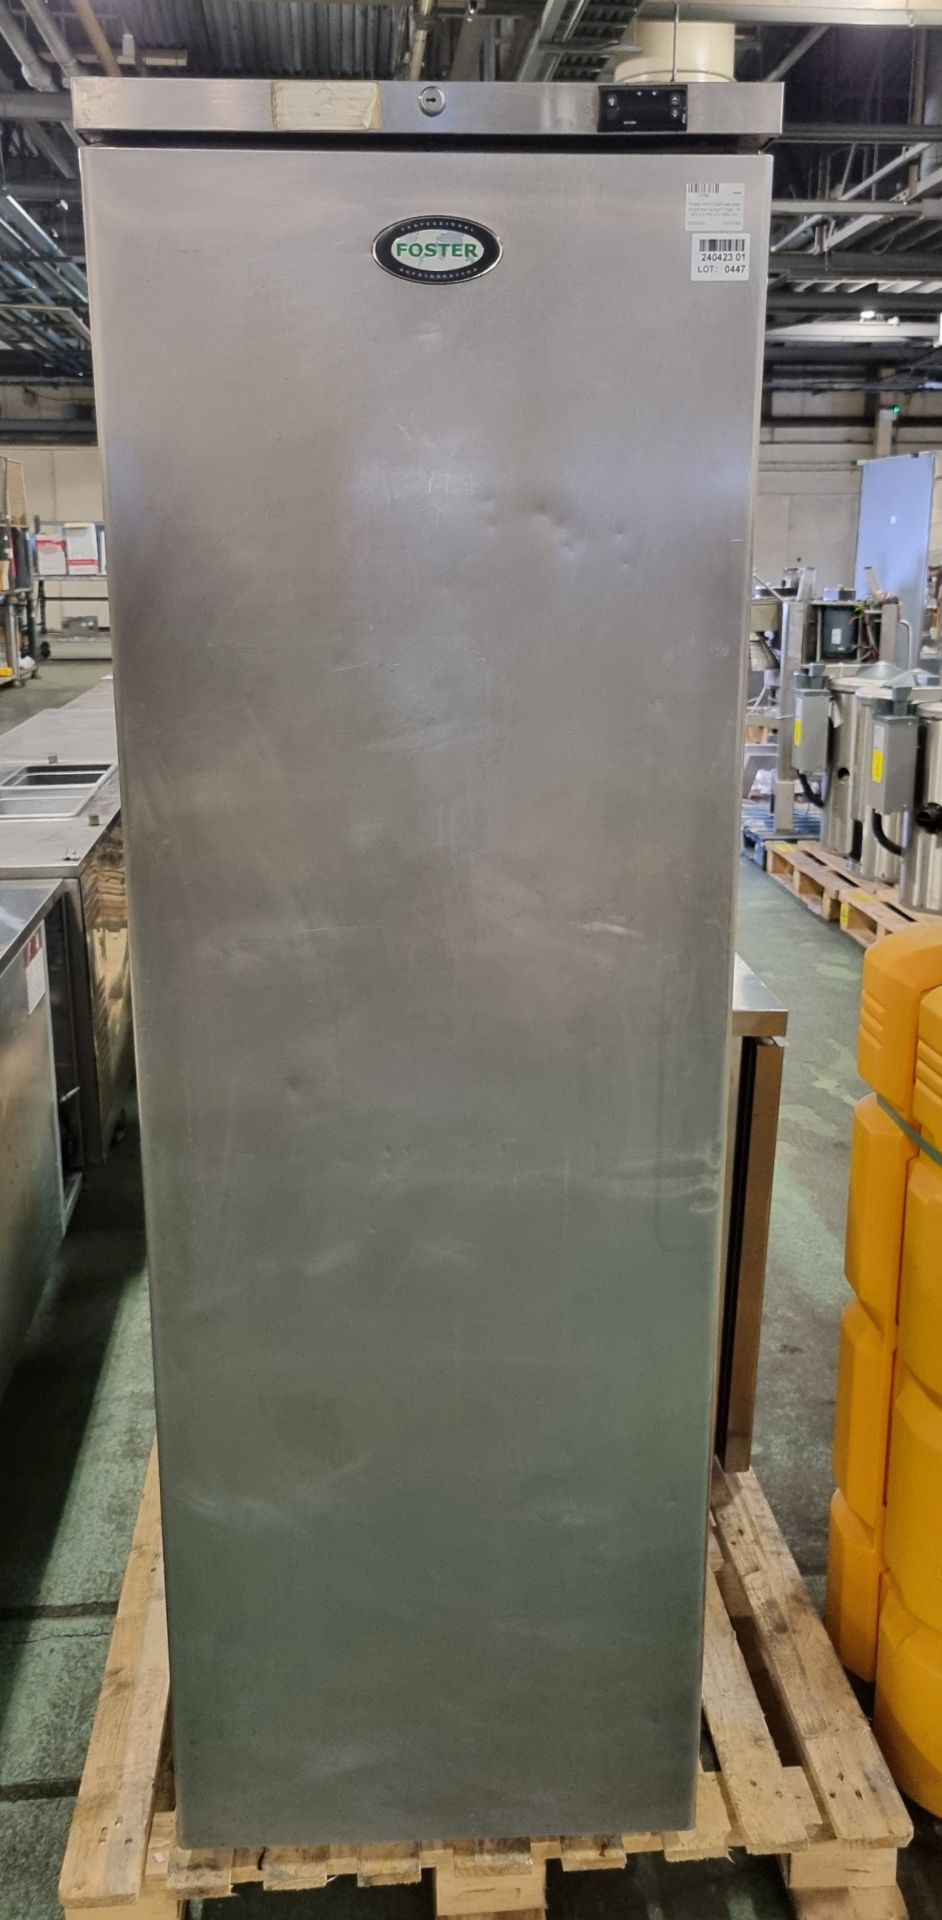 Foster HR410 stainless steel single door upright fridge - W 600 x D 640 x H 1860 mm